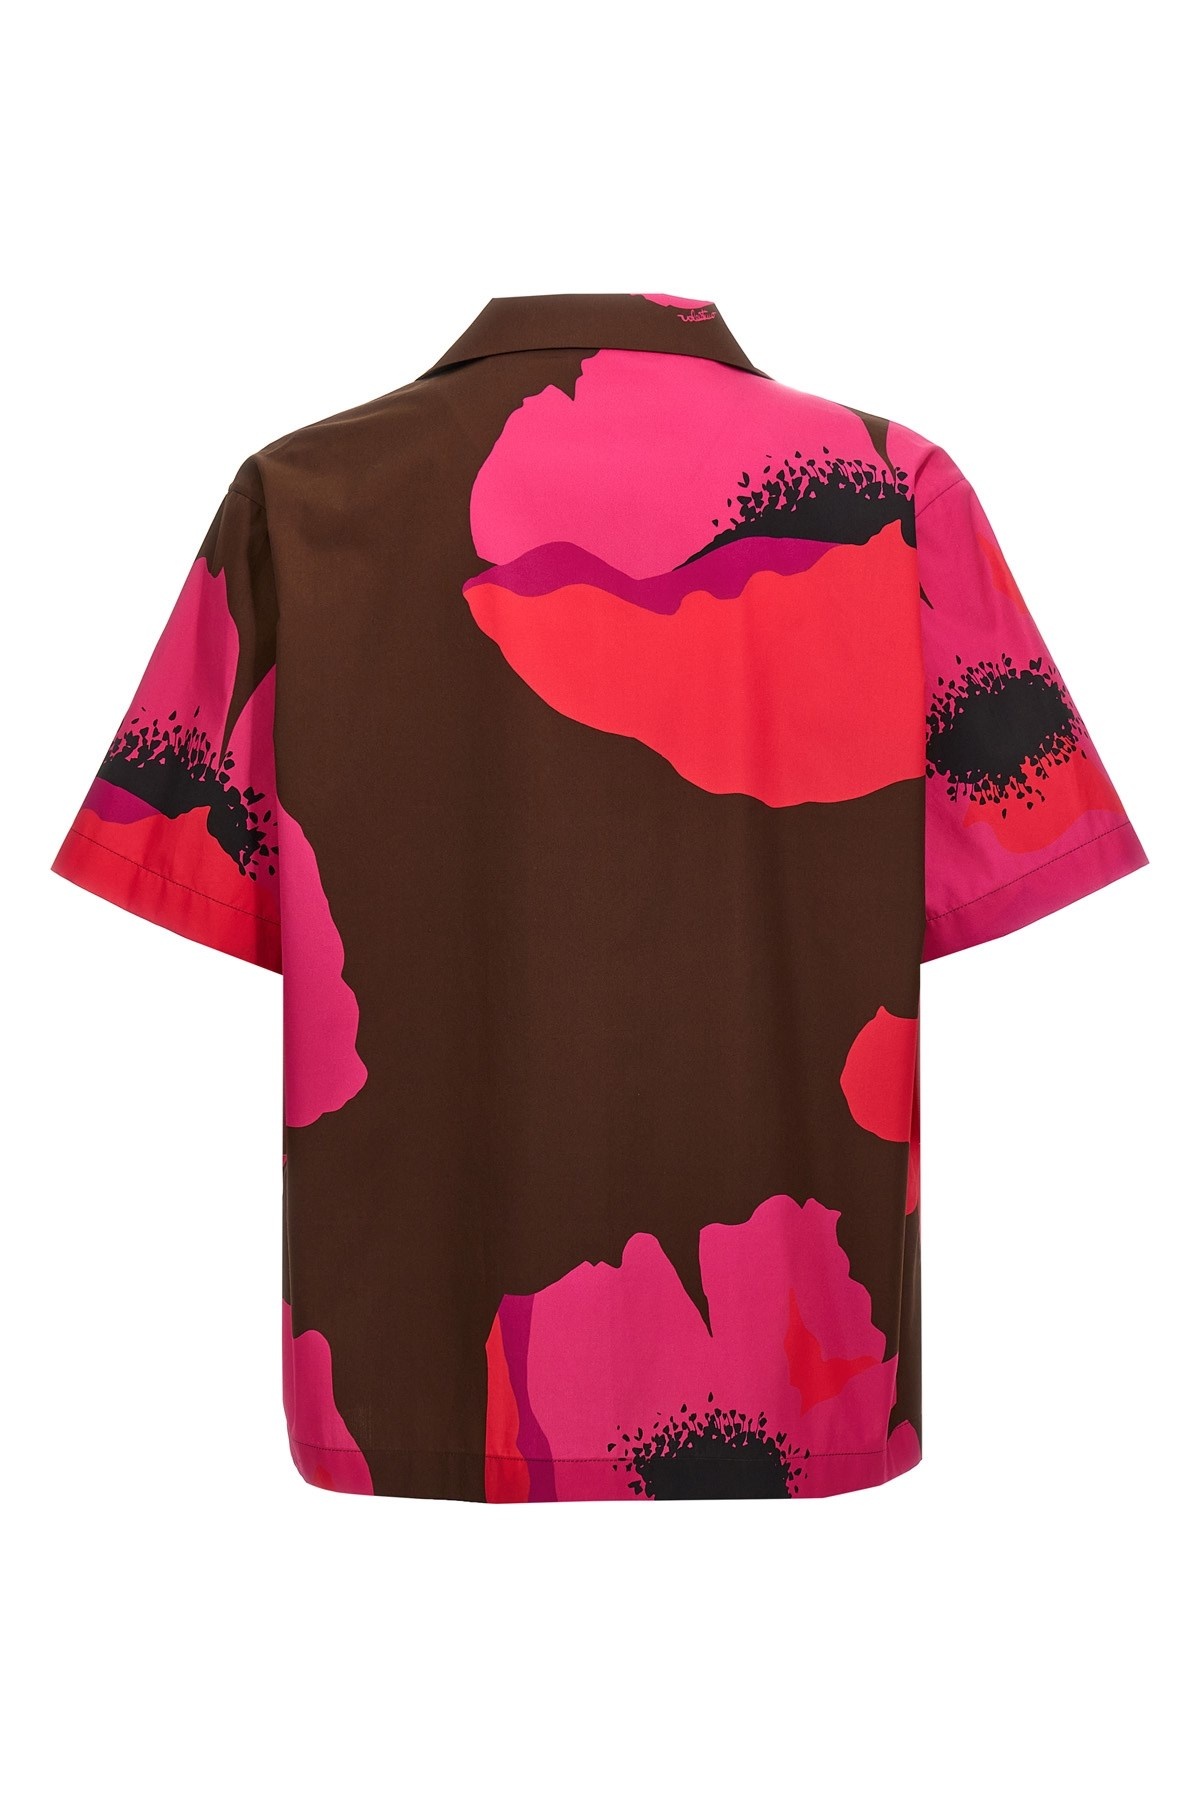 Valentino floral print shirt - 3